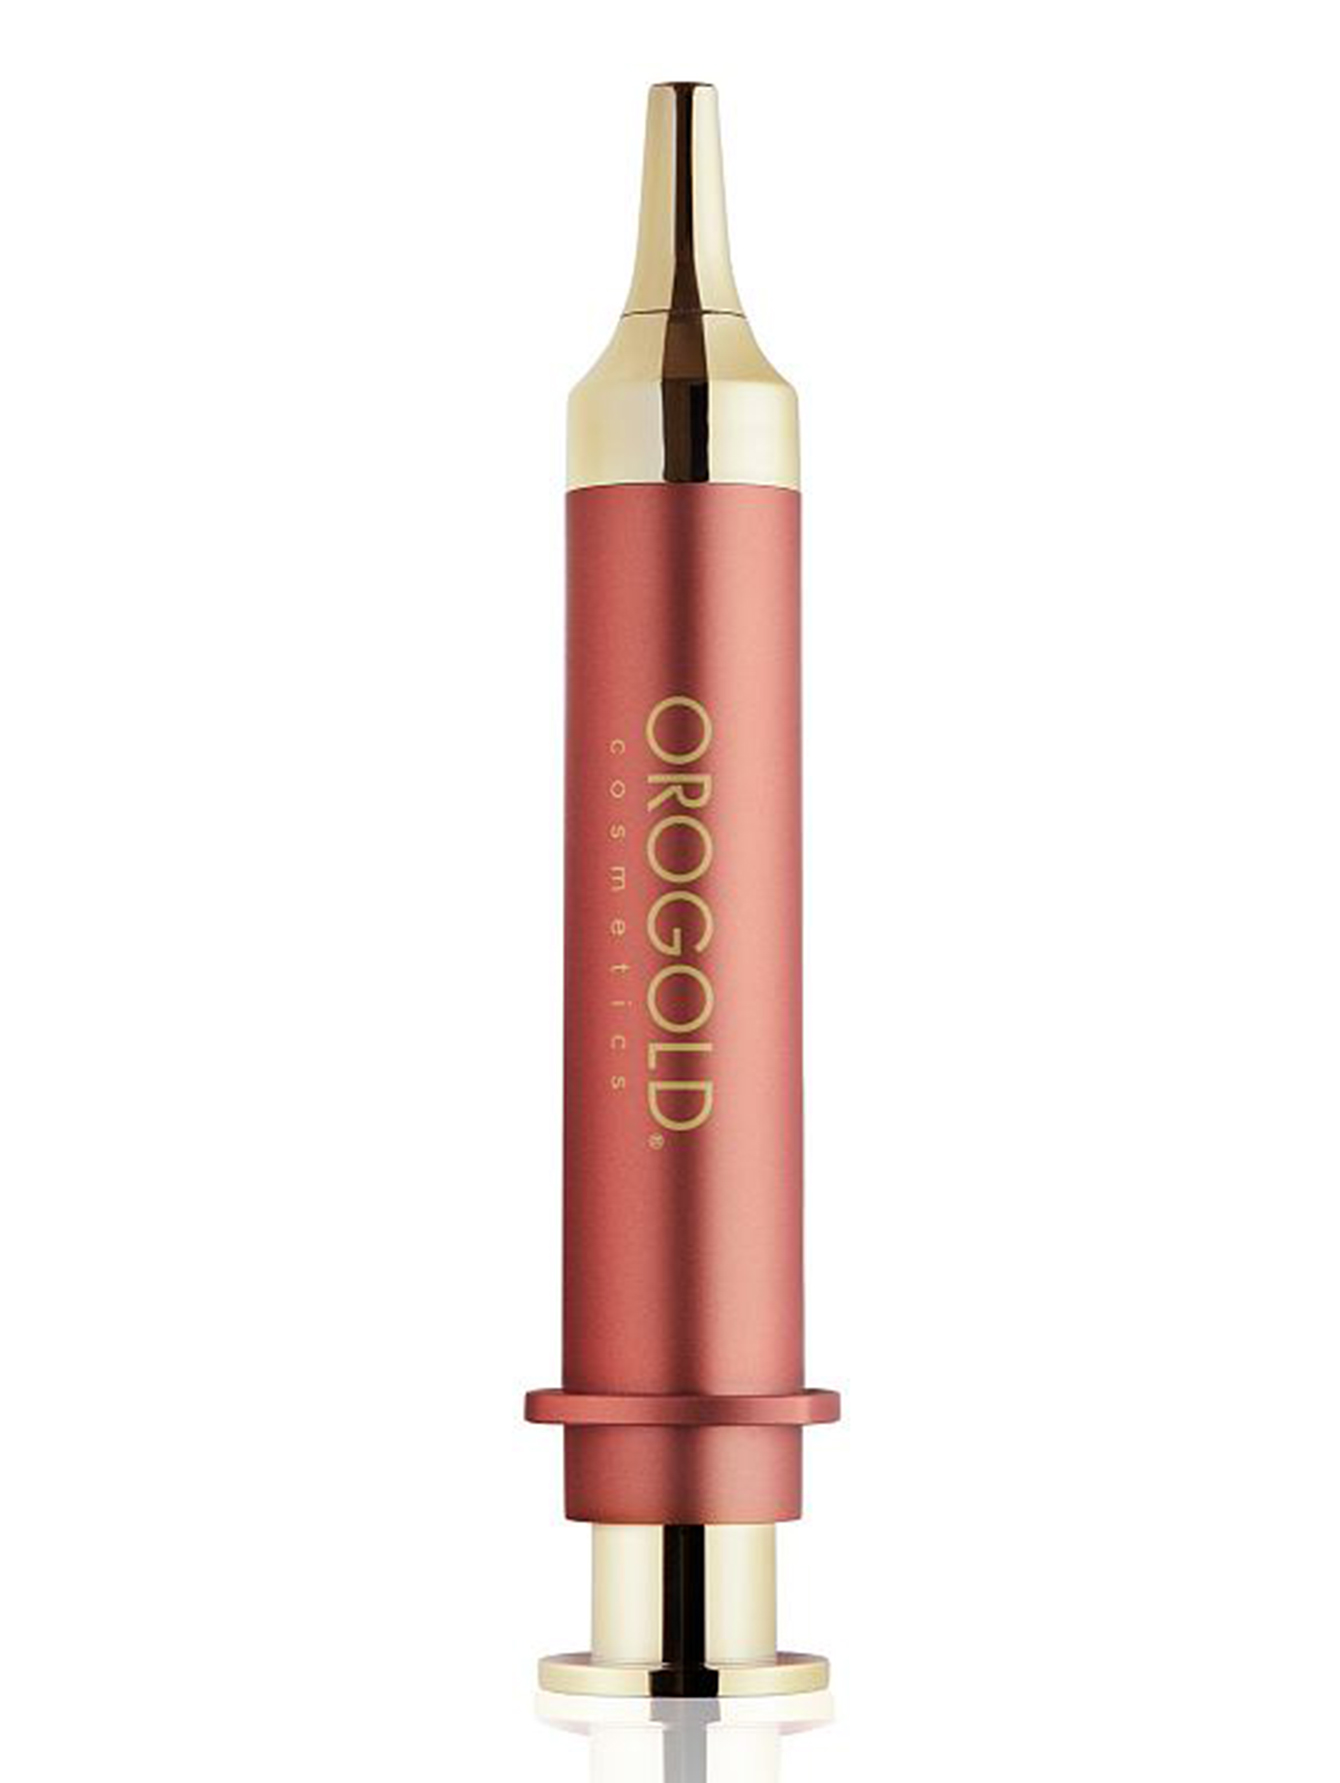 Сыворотка-шприц ДМАЕ для глубоких морщин Orogold Cosmetics - Общий вид